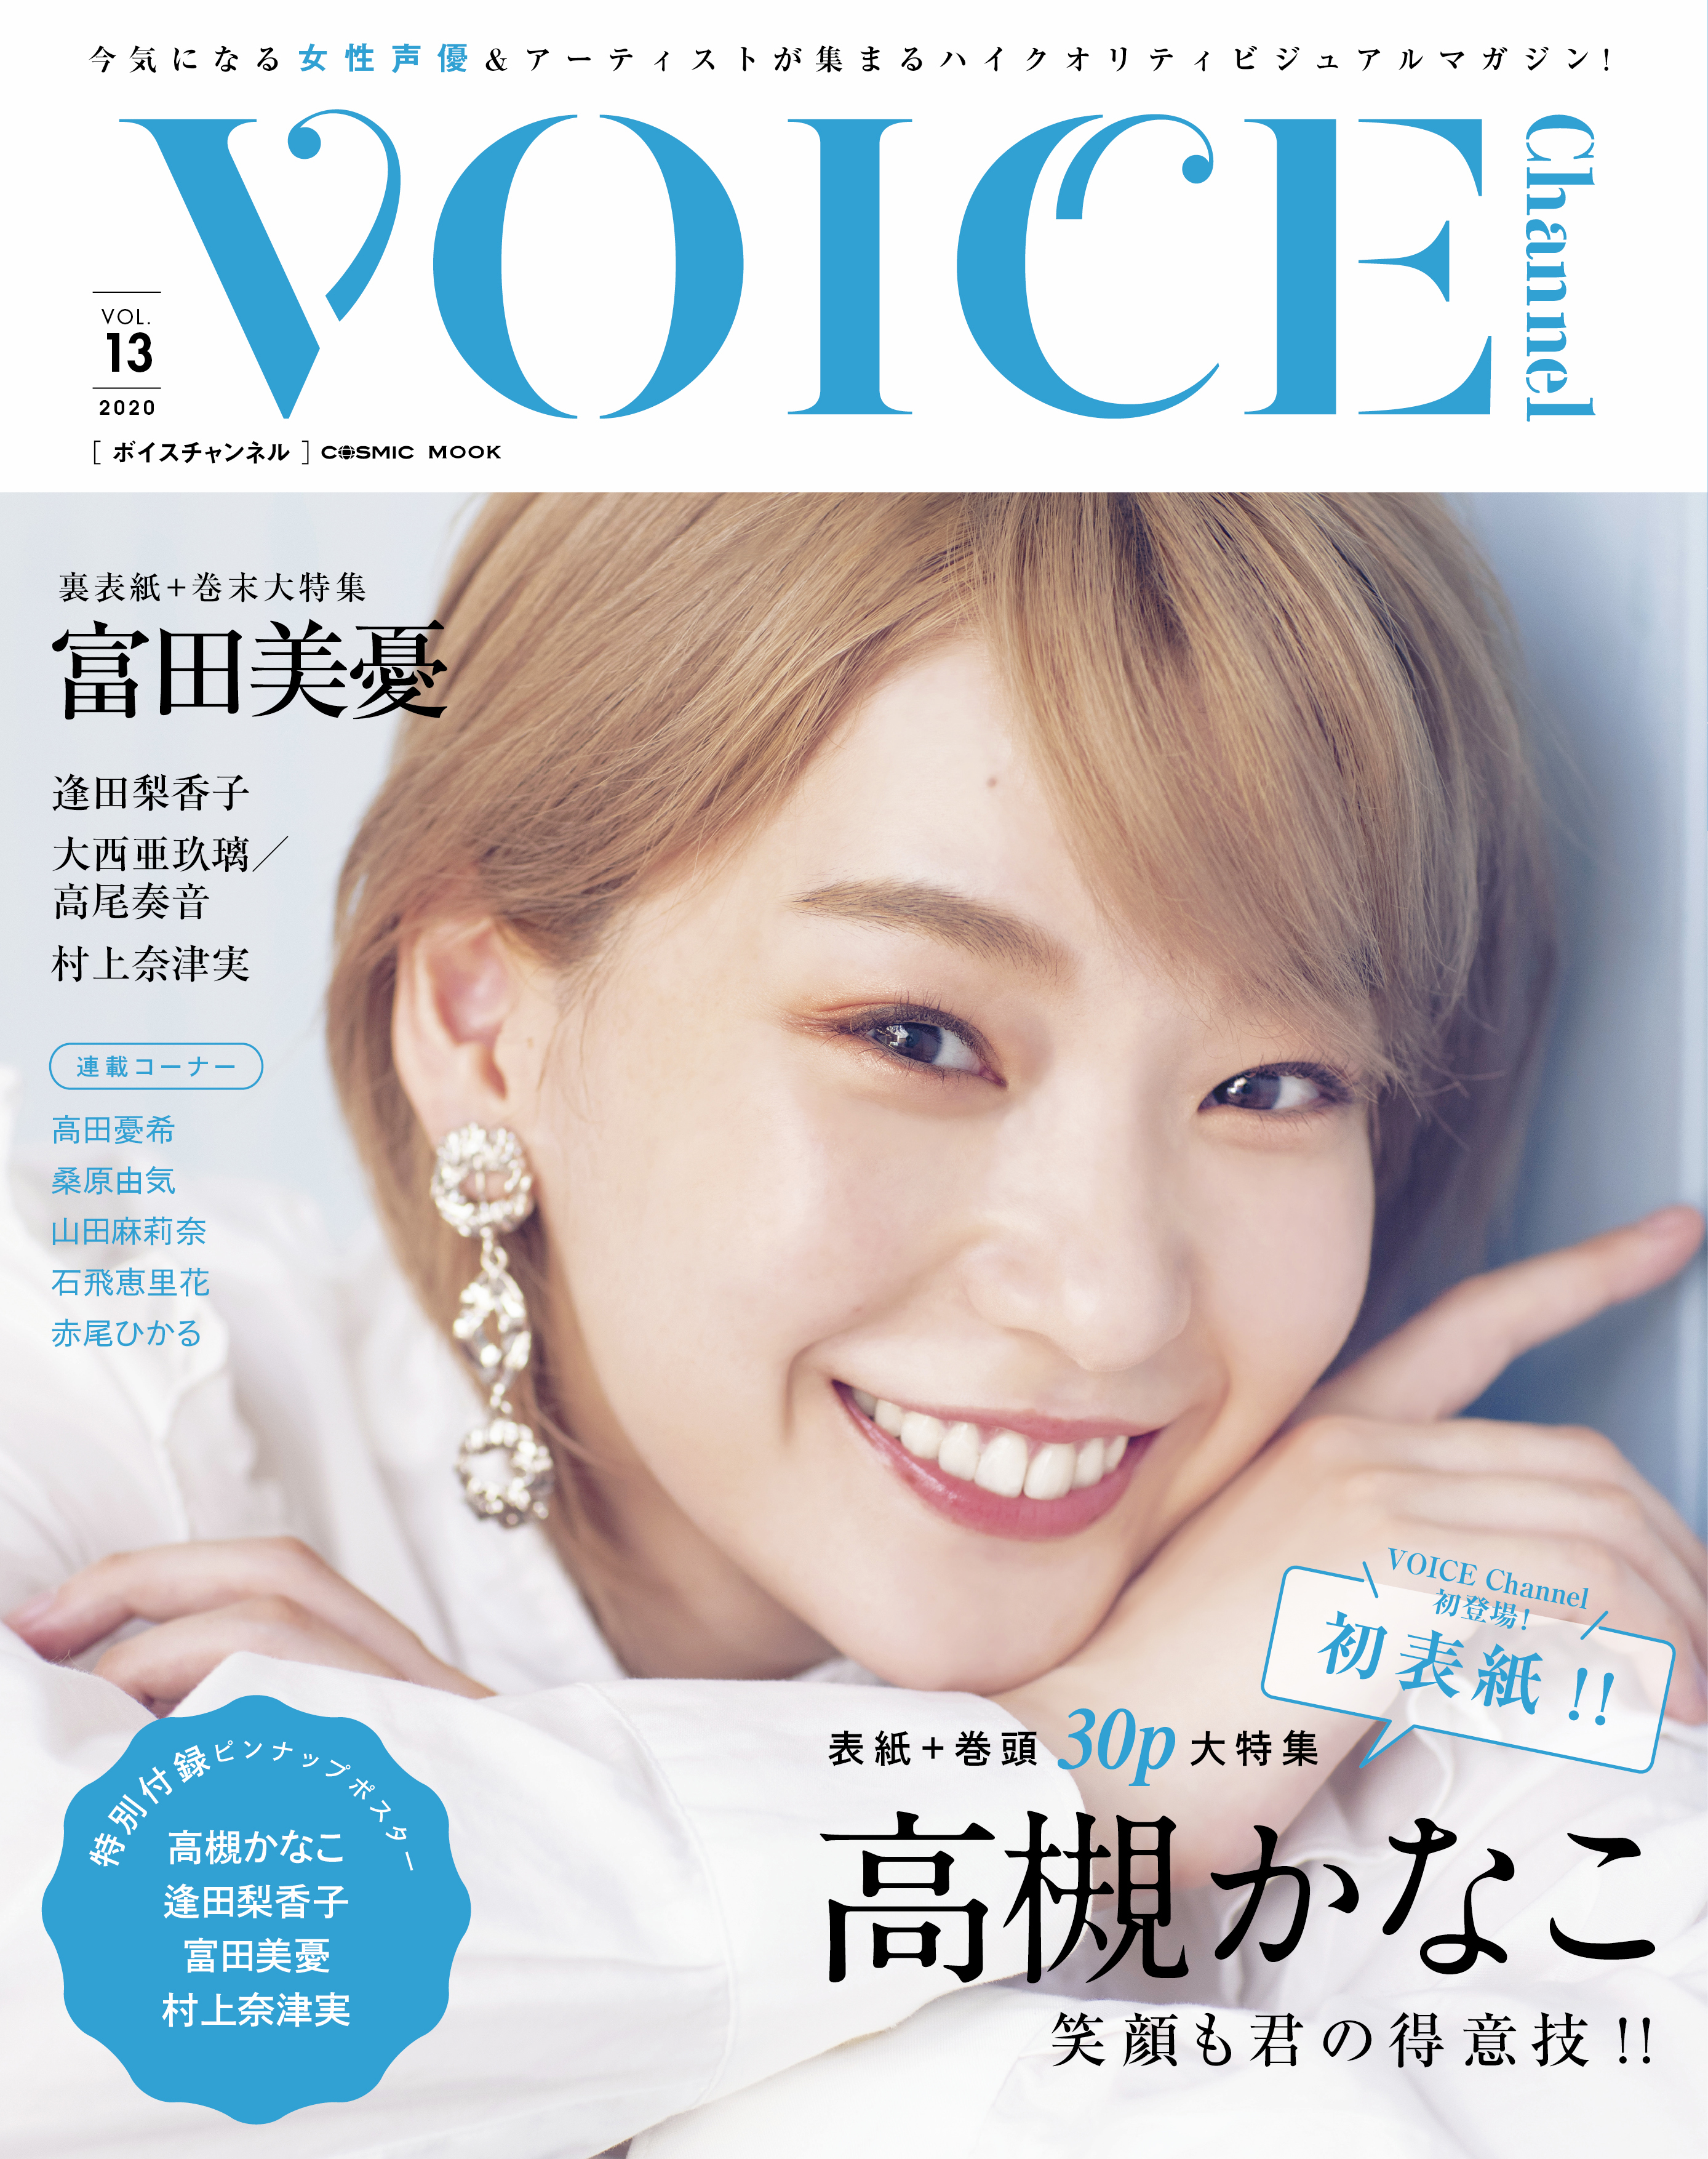 voice channel vol.7 逢田梨香子 ポスター